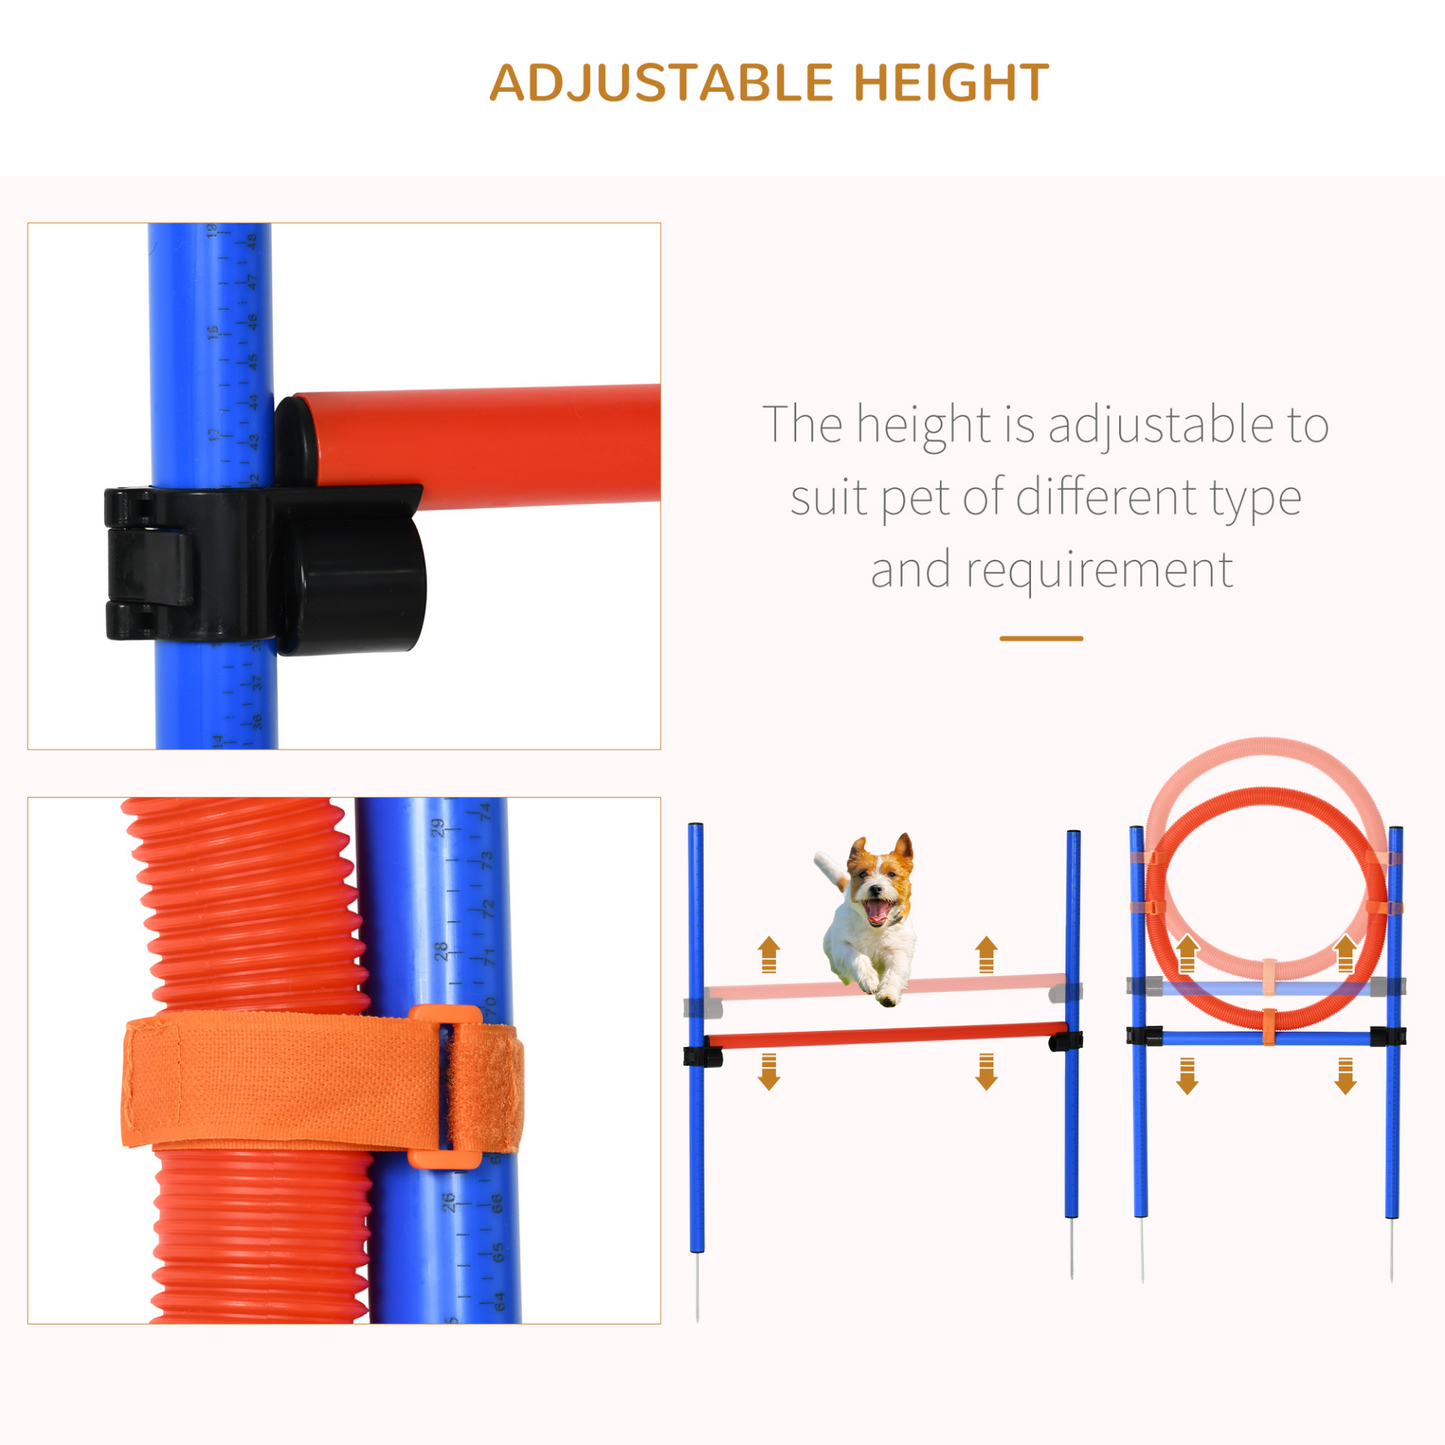 PawHut Pet Agility Training Equipment Dog Play Run Jump Obedience Training Set Adjustable (Pole + Hoop + Hurdle)